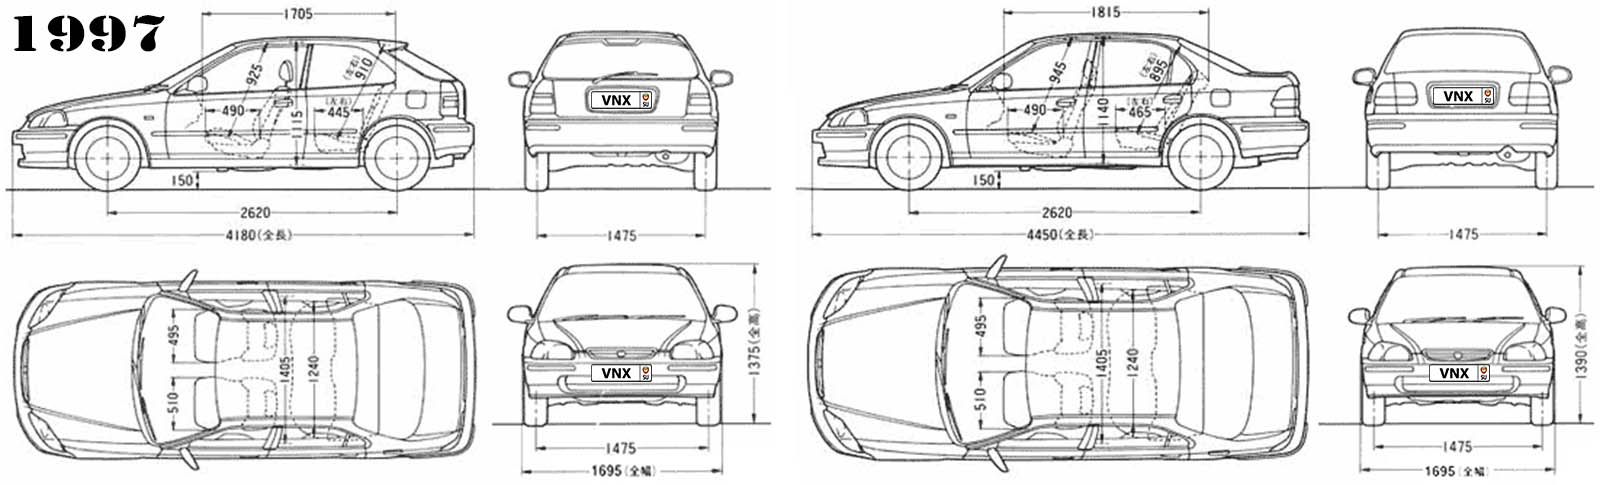 Габаритные размеры Хонда Сивик 1997 (dimensions Honda Civic mk6)